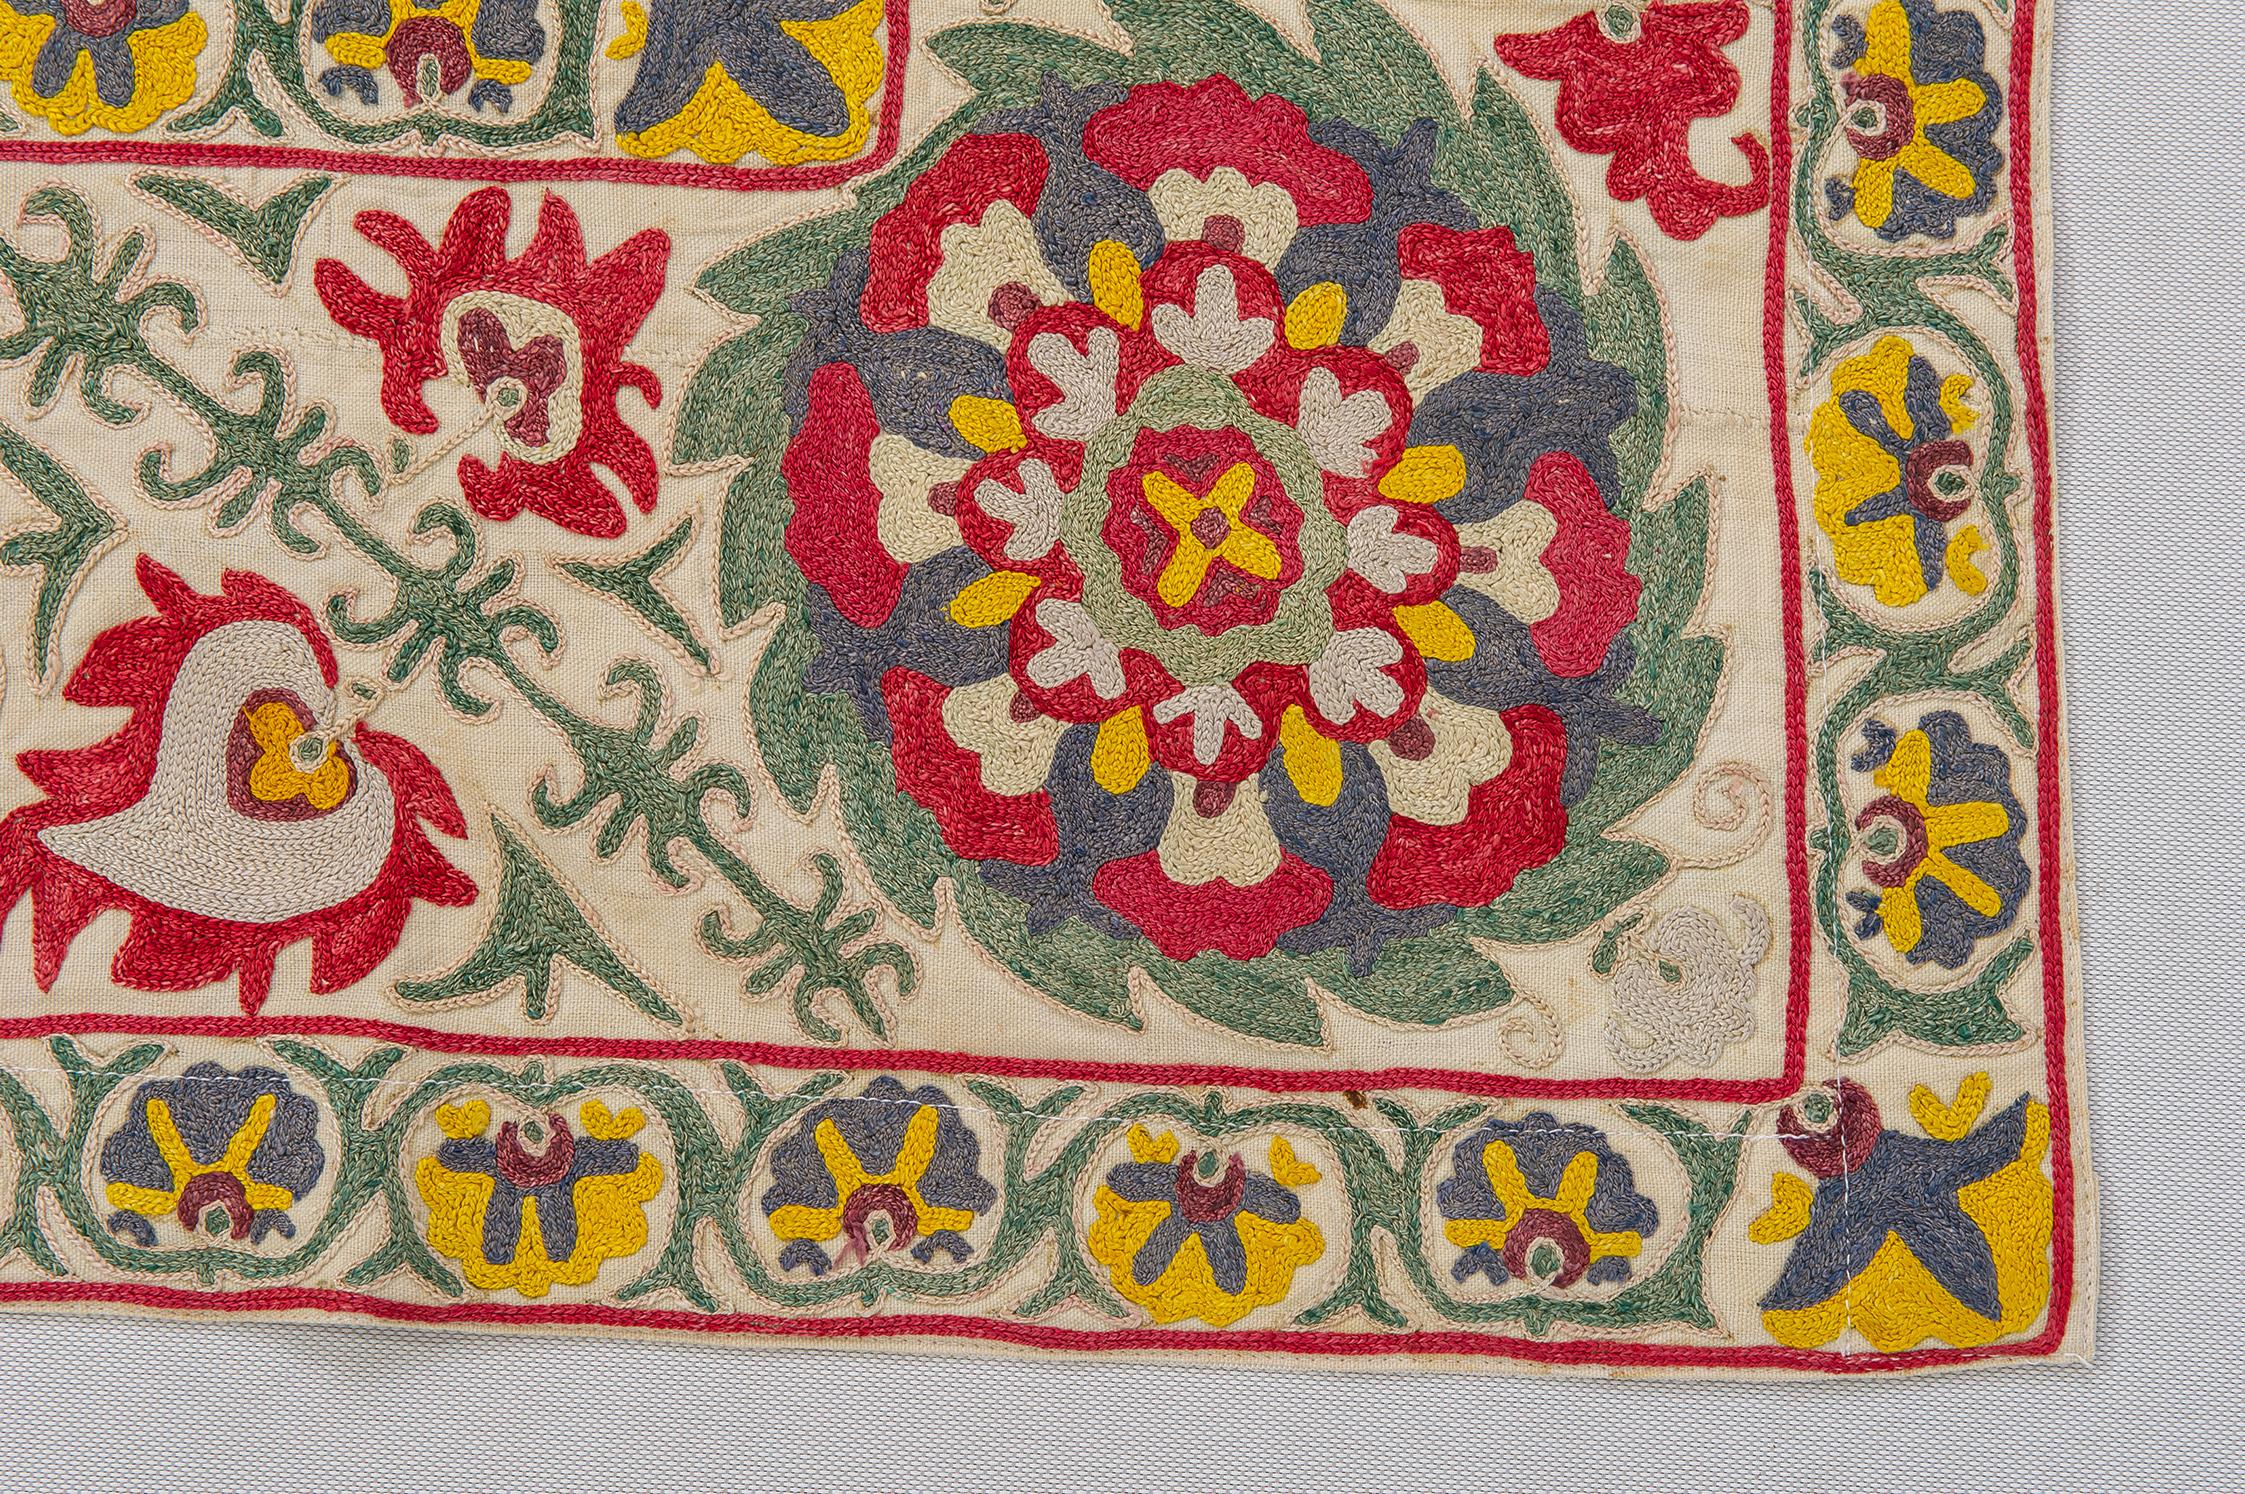 Turkmen Suzani Turkoman Embroidery in Little Size For Sale